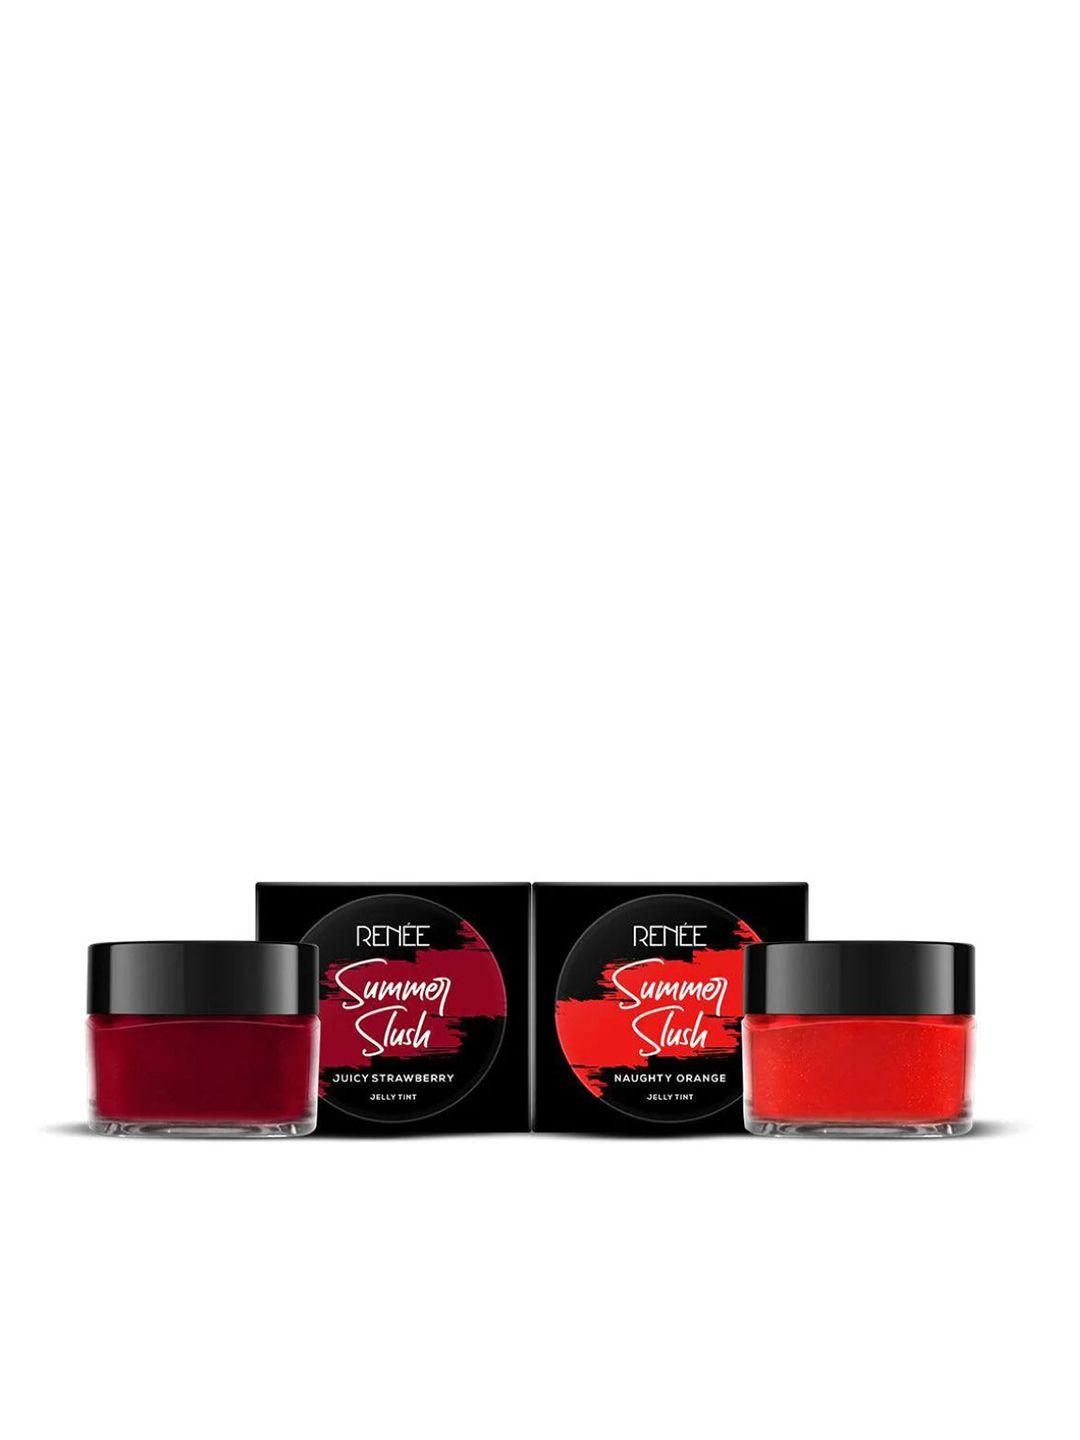 renee set of 2 summer slush jelly lip tint 13g each - juicy strawberry & naughty orange